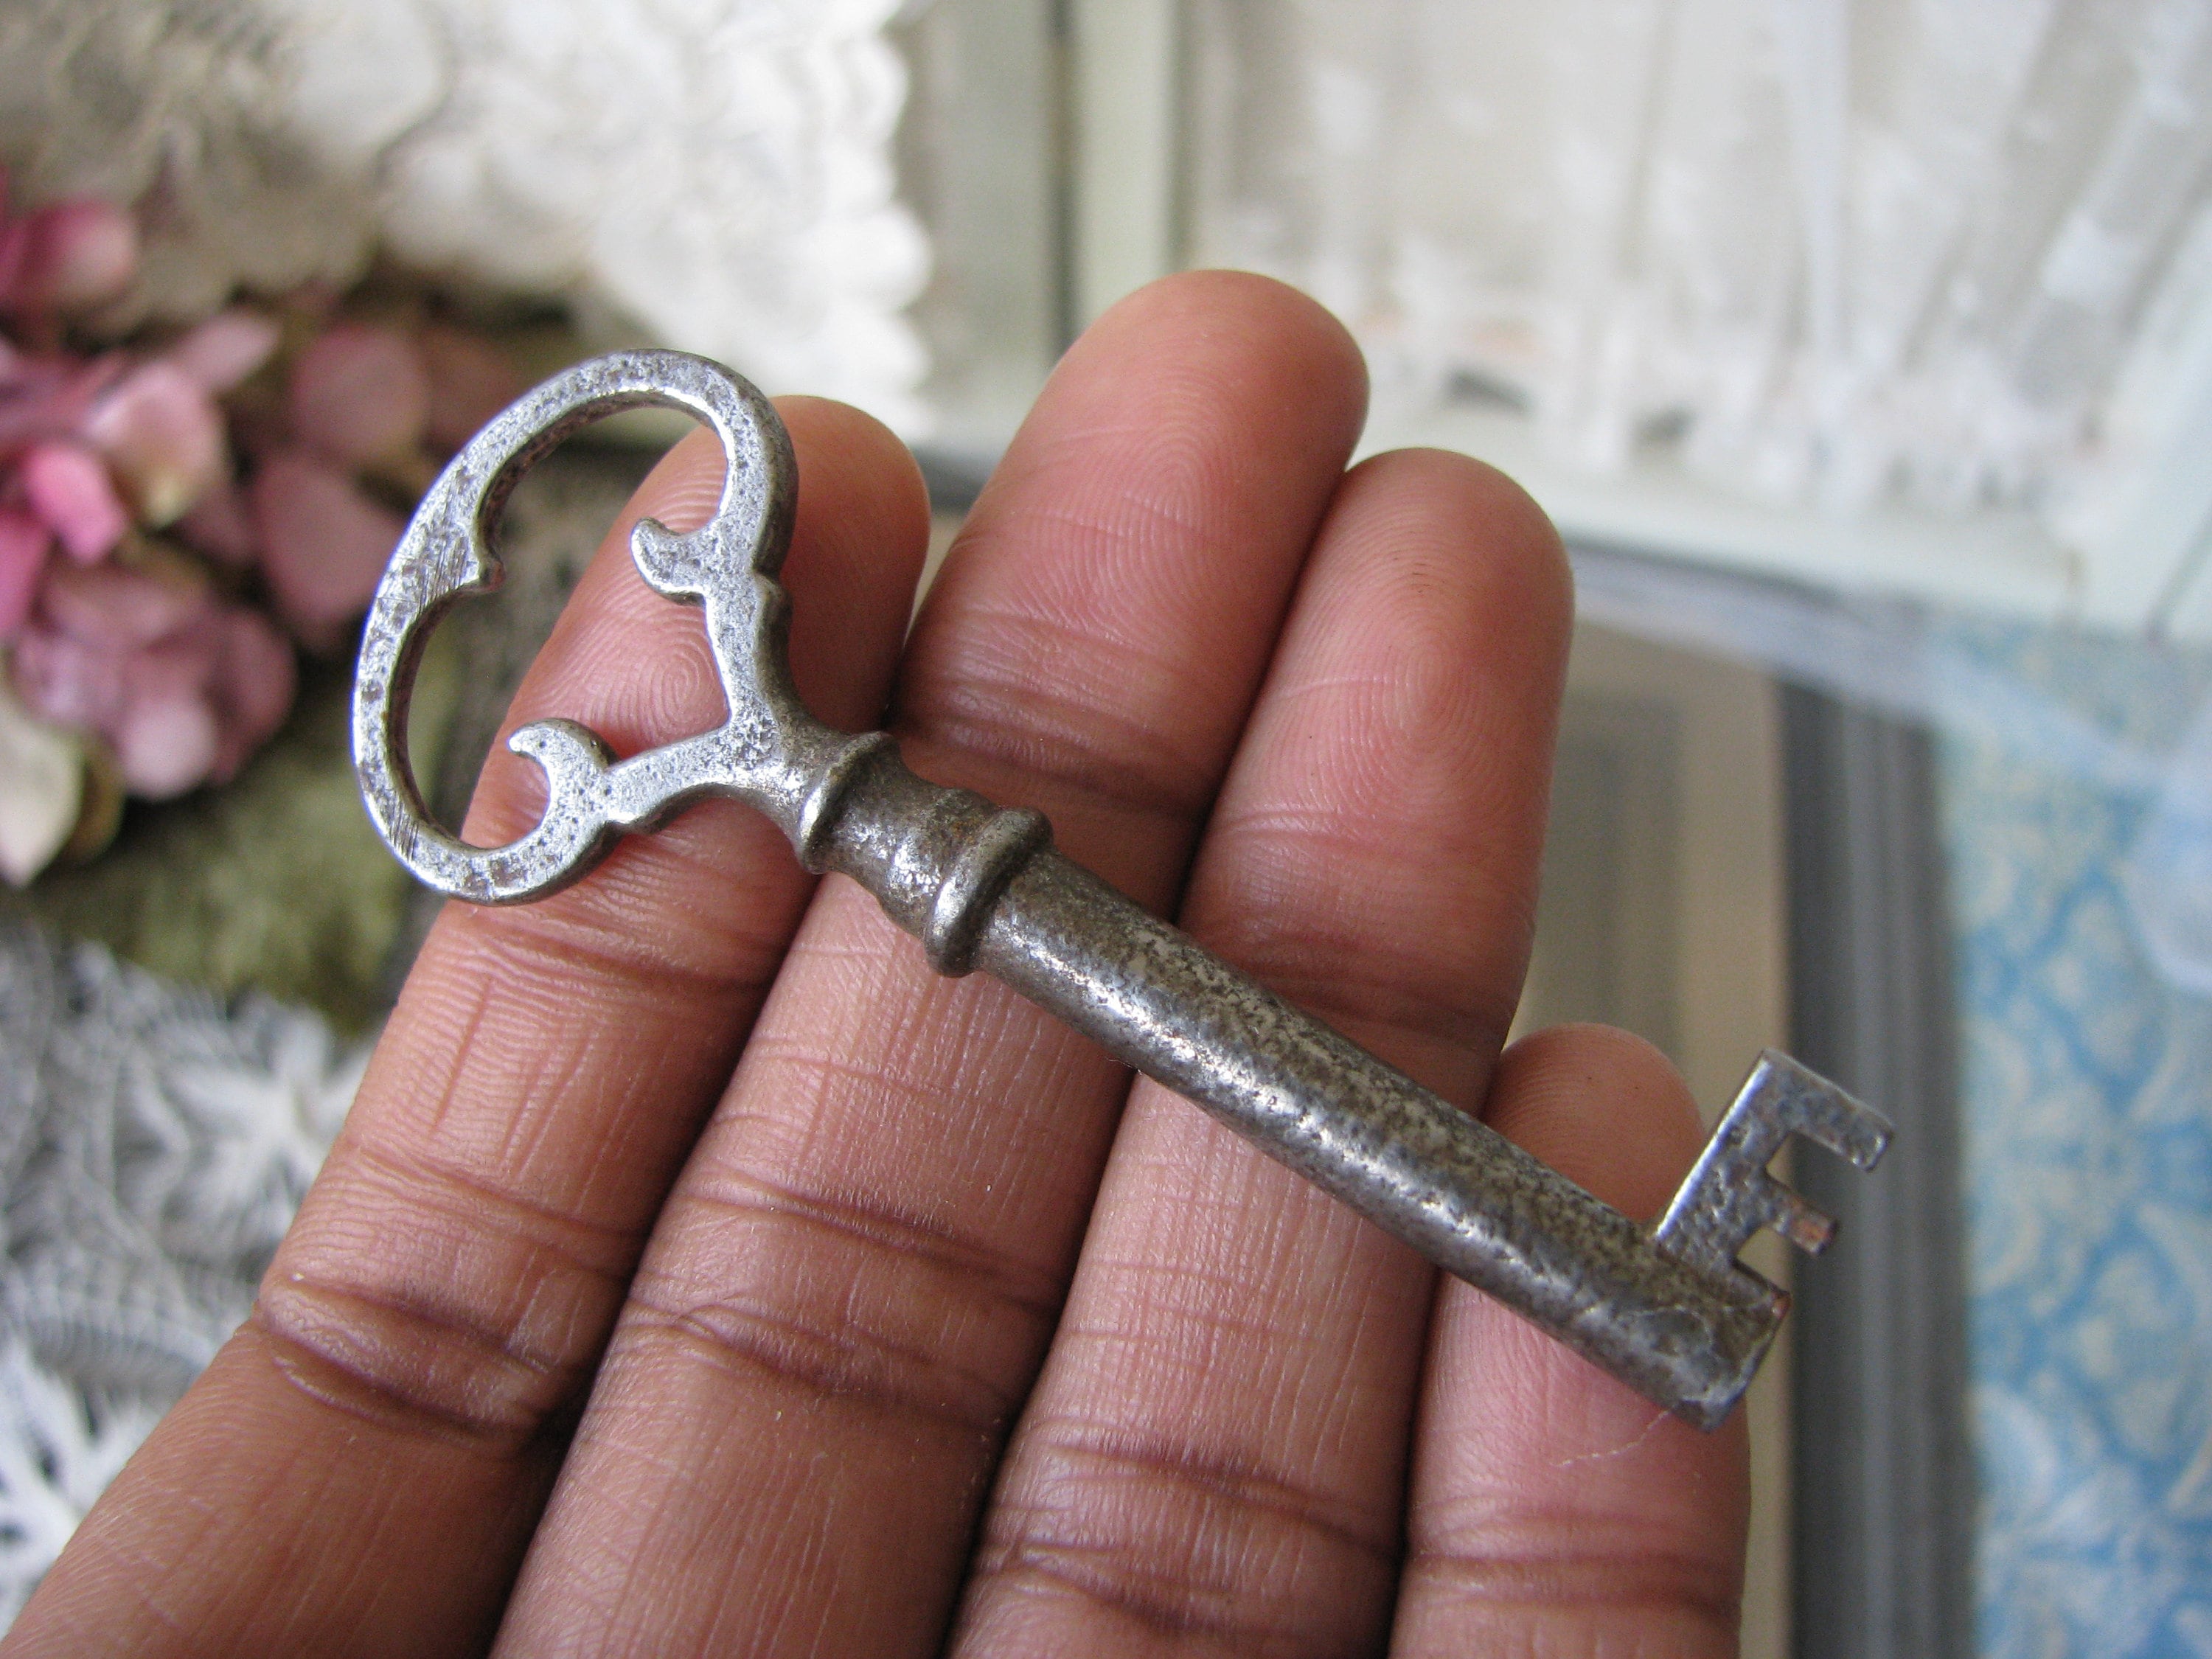 Antique Steampunk Key Antique Skeleton Key Antique Heart Shaped Key Love Token Steampunk Skeleton Key Key To My Heart Wedding Key